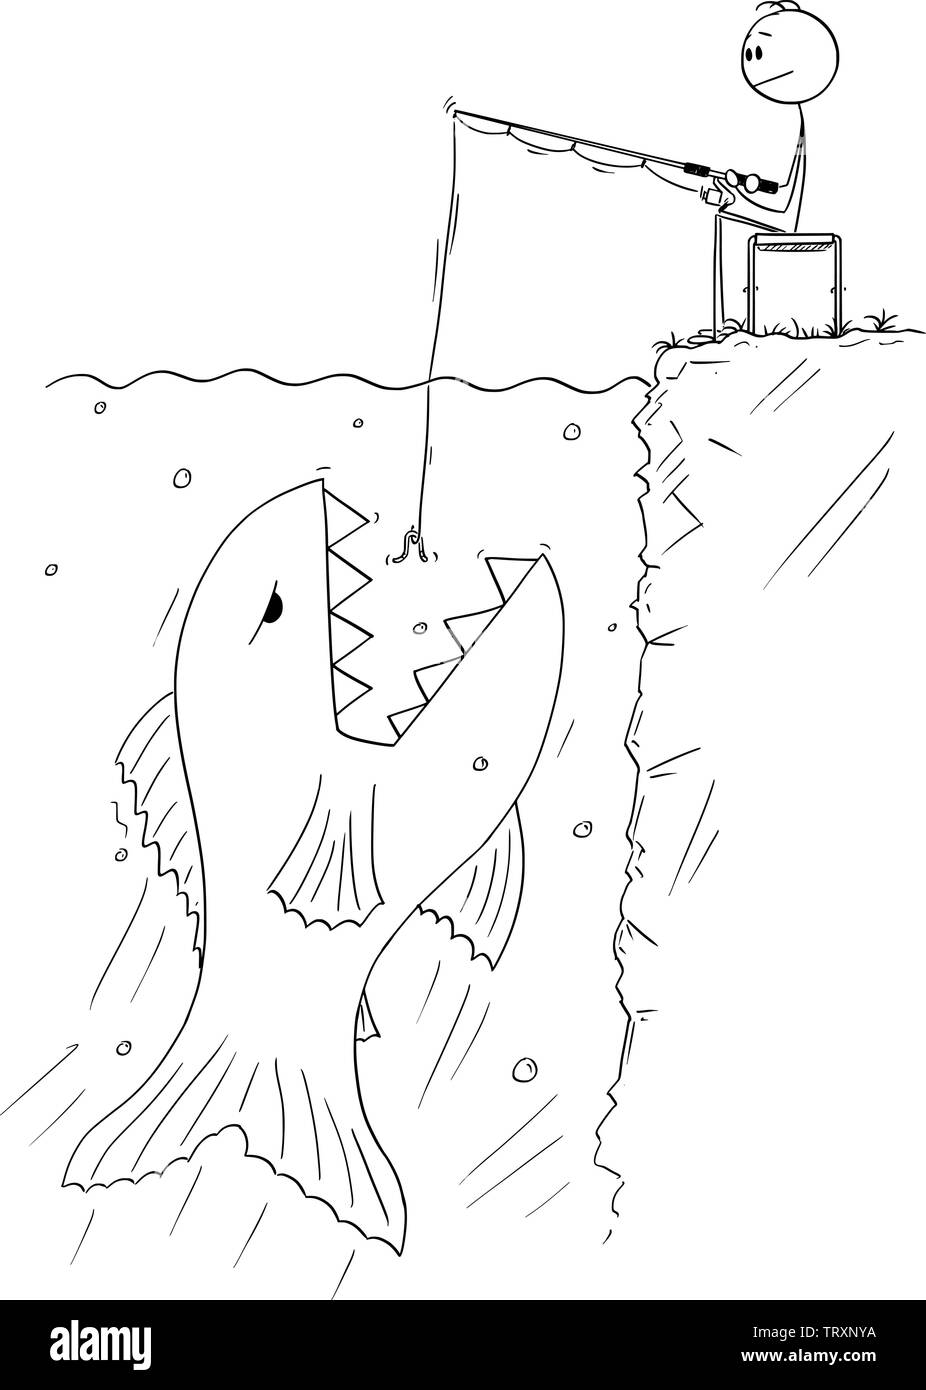 picture diver descending into submarine cartoon